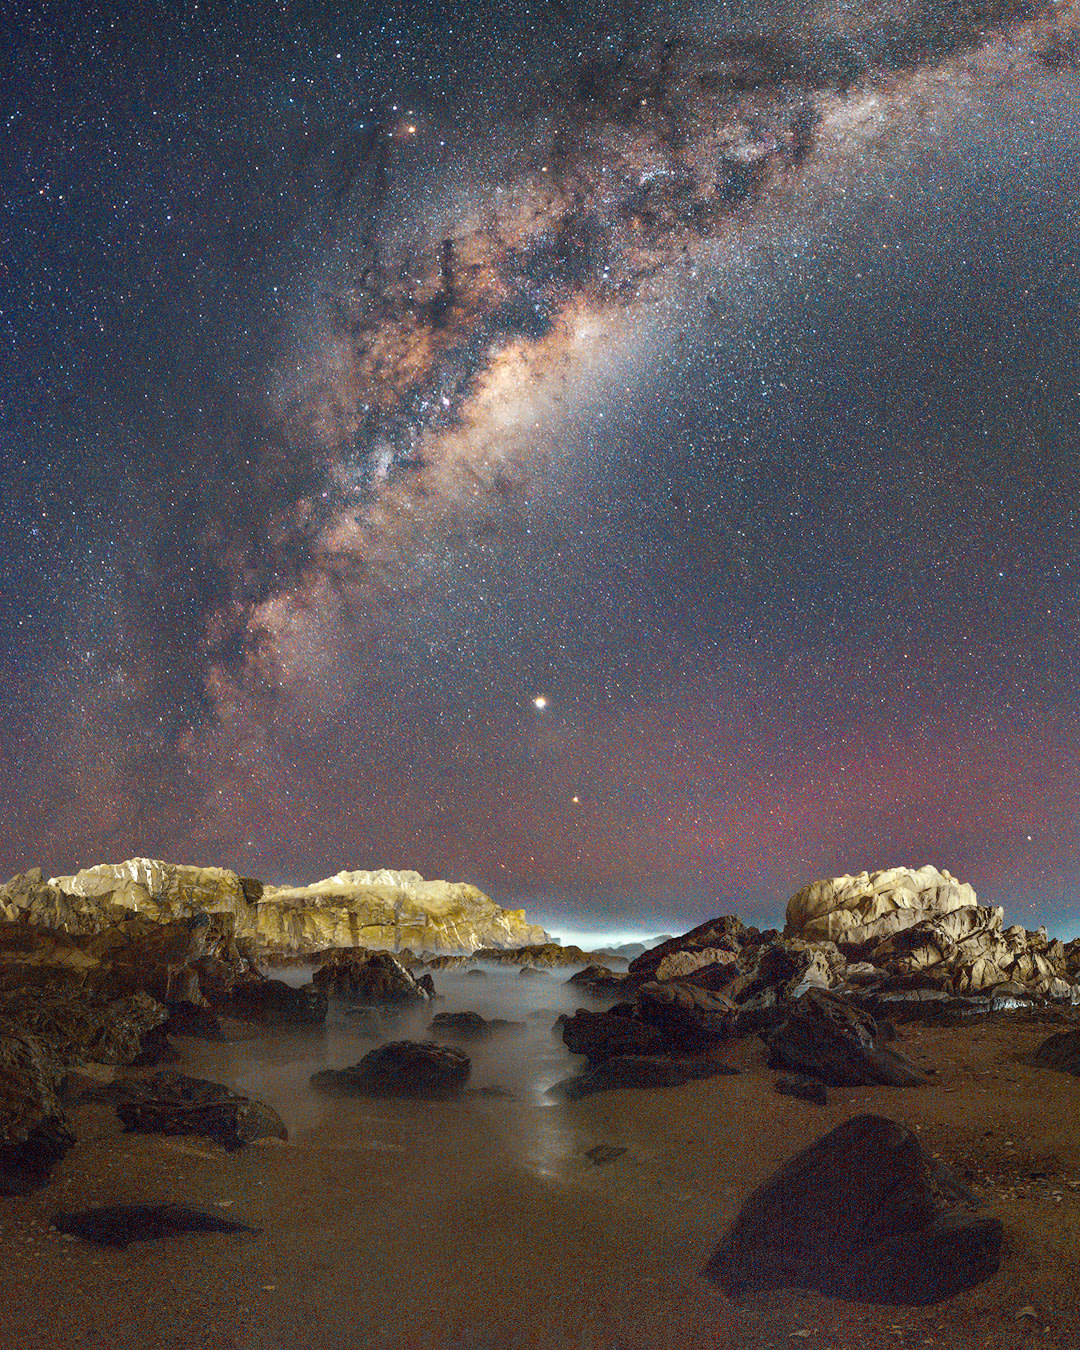 Milky way captured with a Smartphone - Uruguay